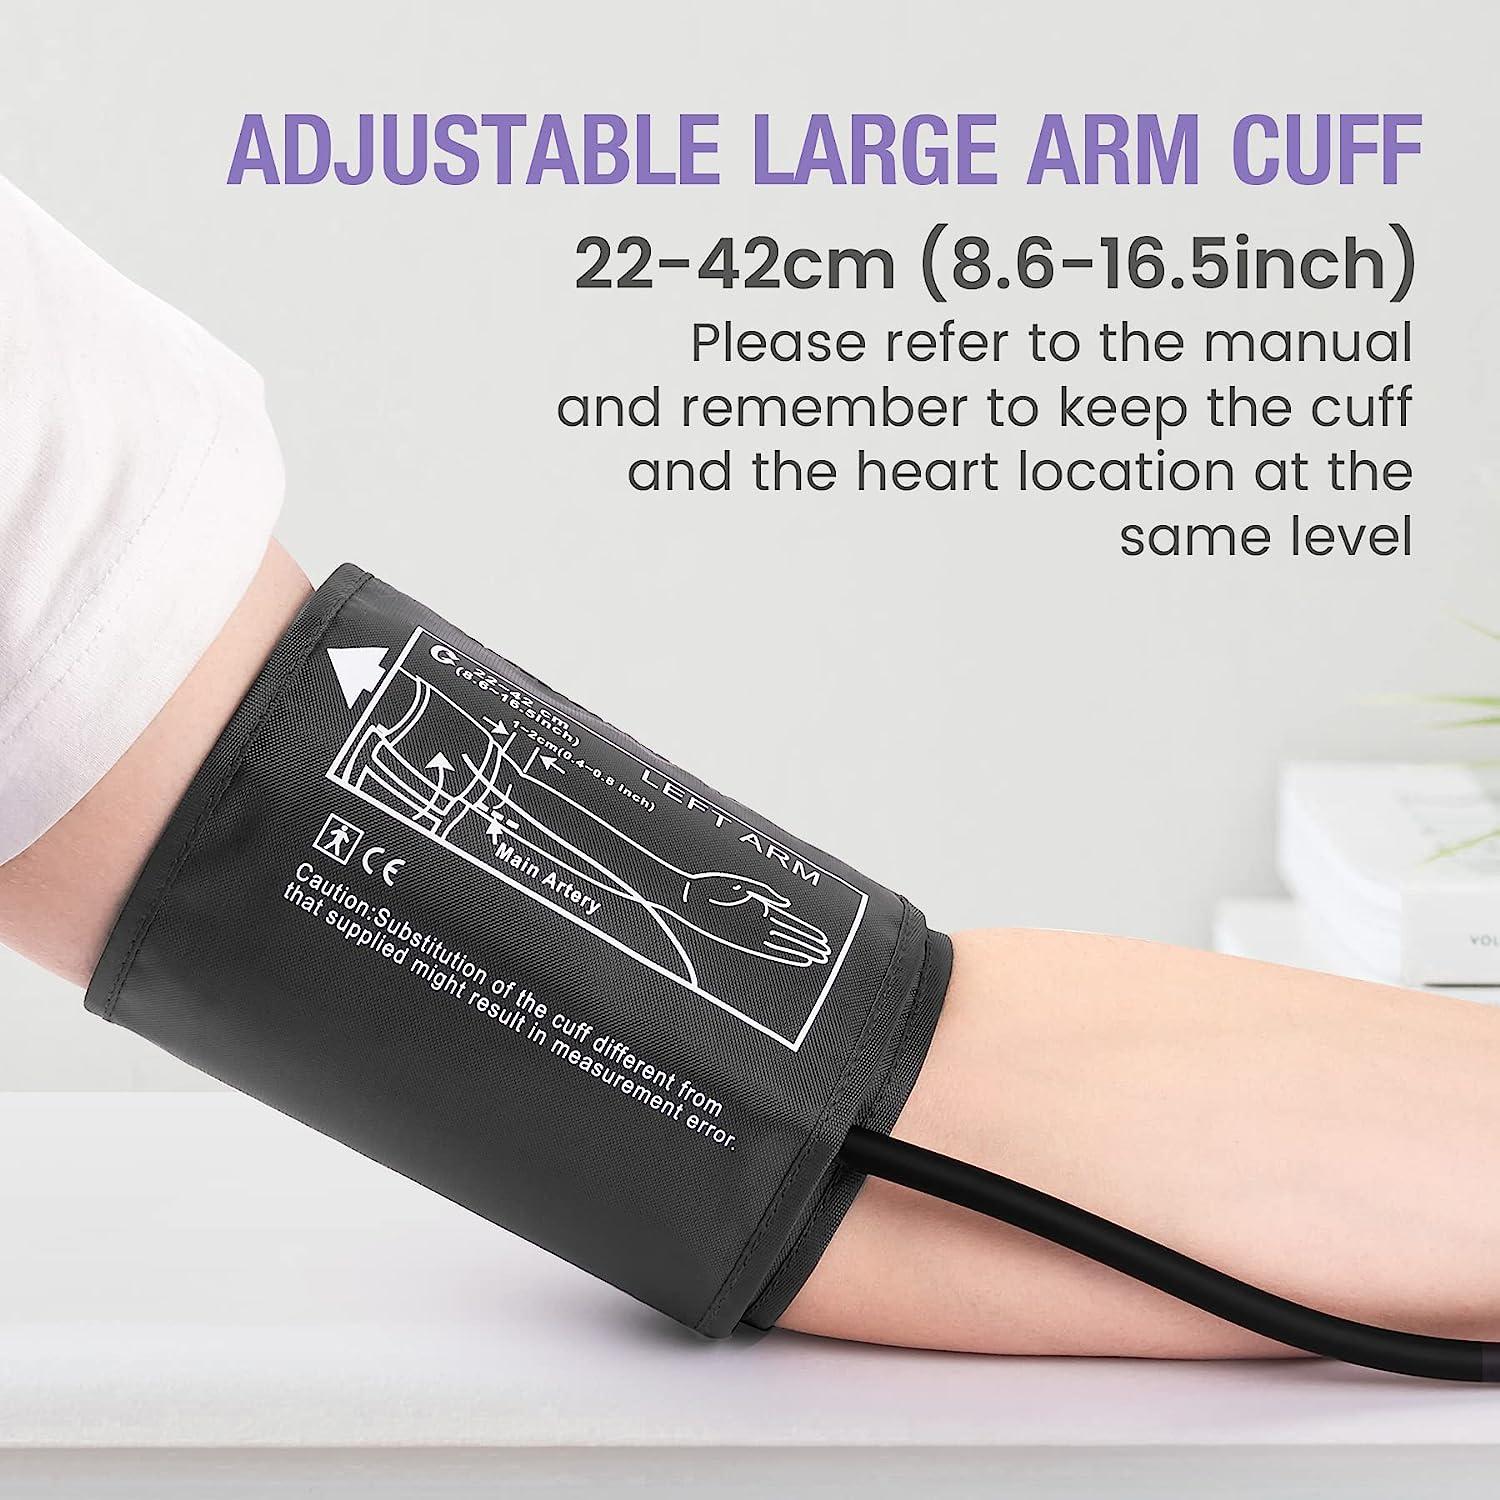 Sejoy Wrist Blood Pressure Monitor, Digital BP Machine, Automatic Home High Blood  Pressure Machine with Adjustable Cuff 